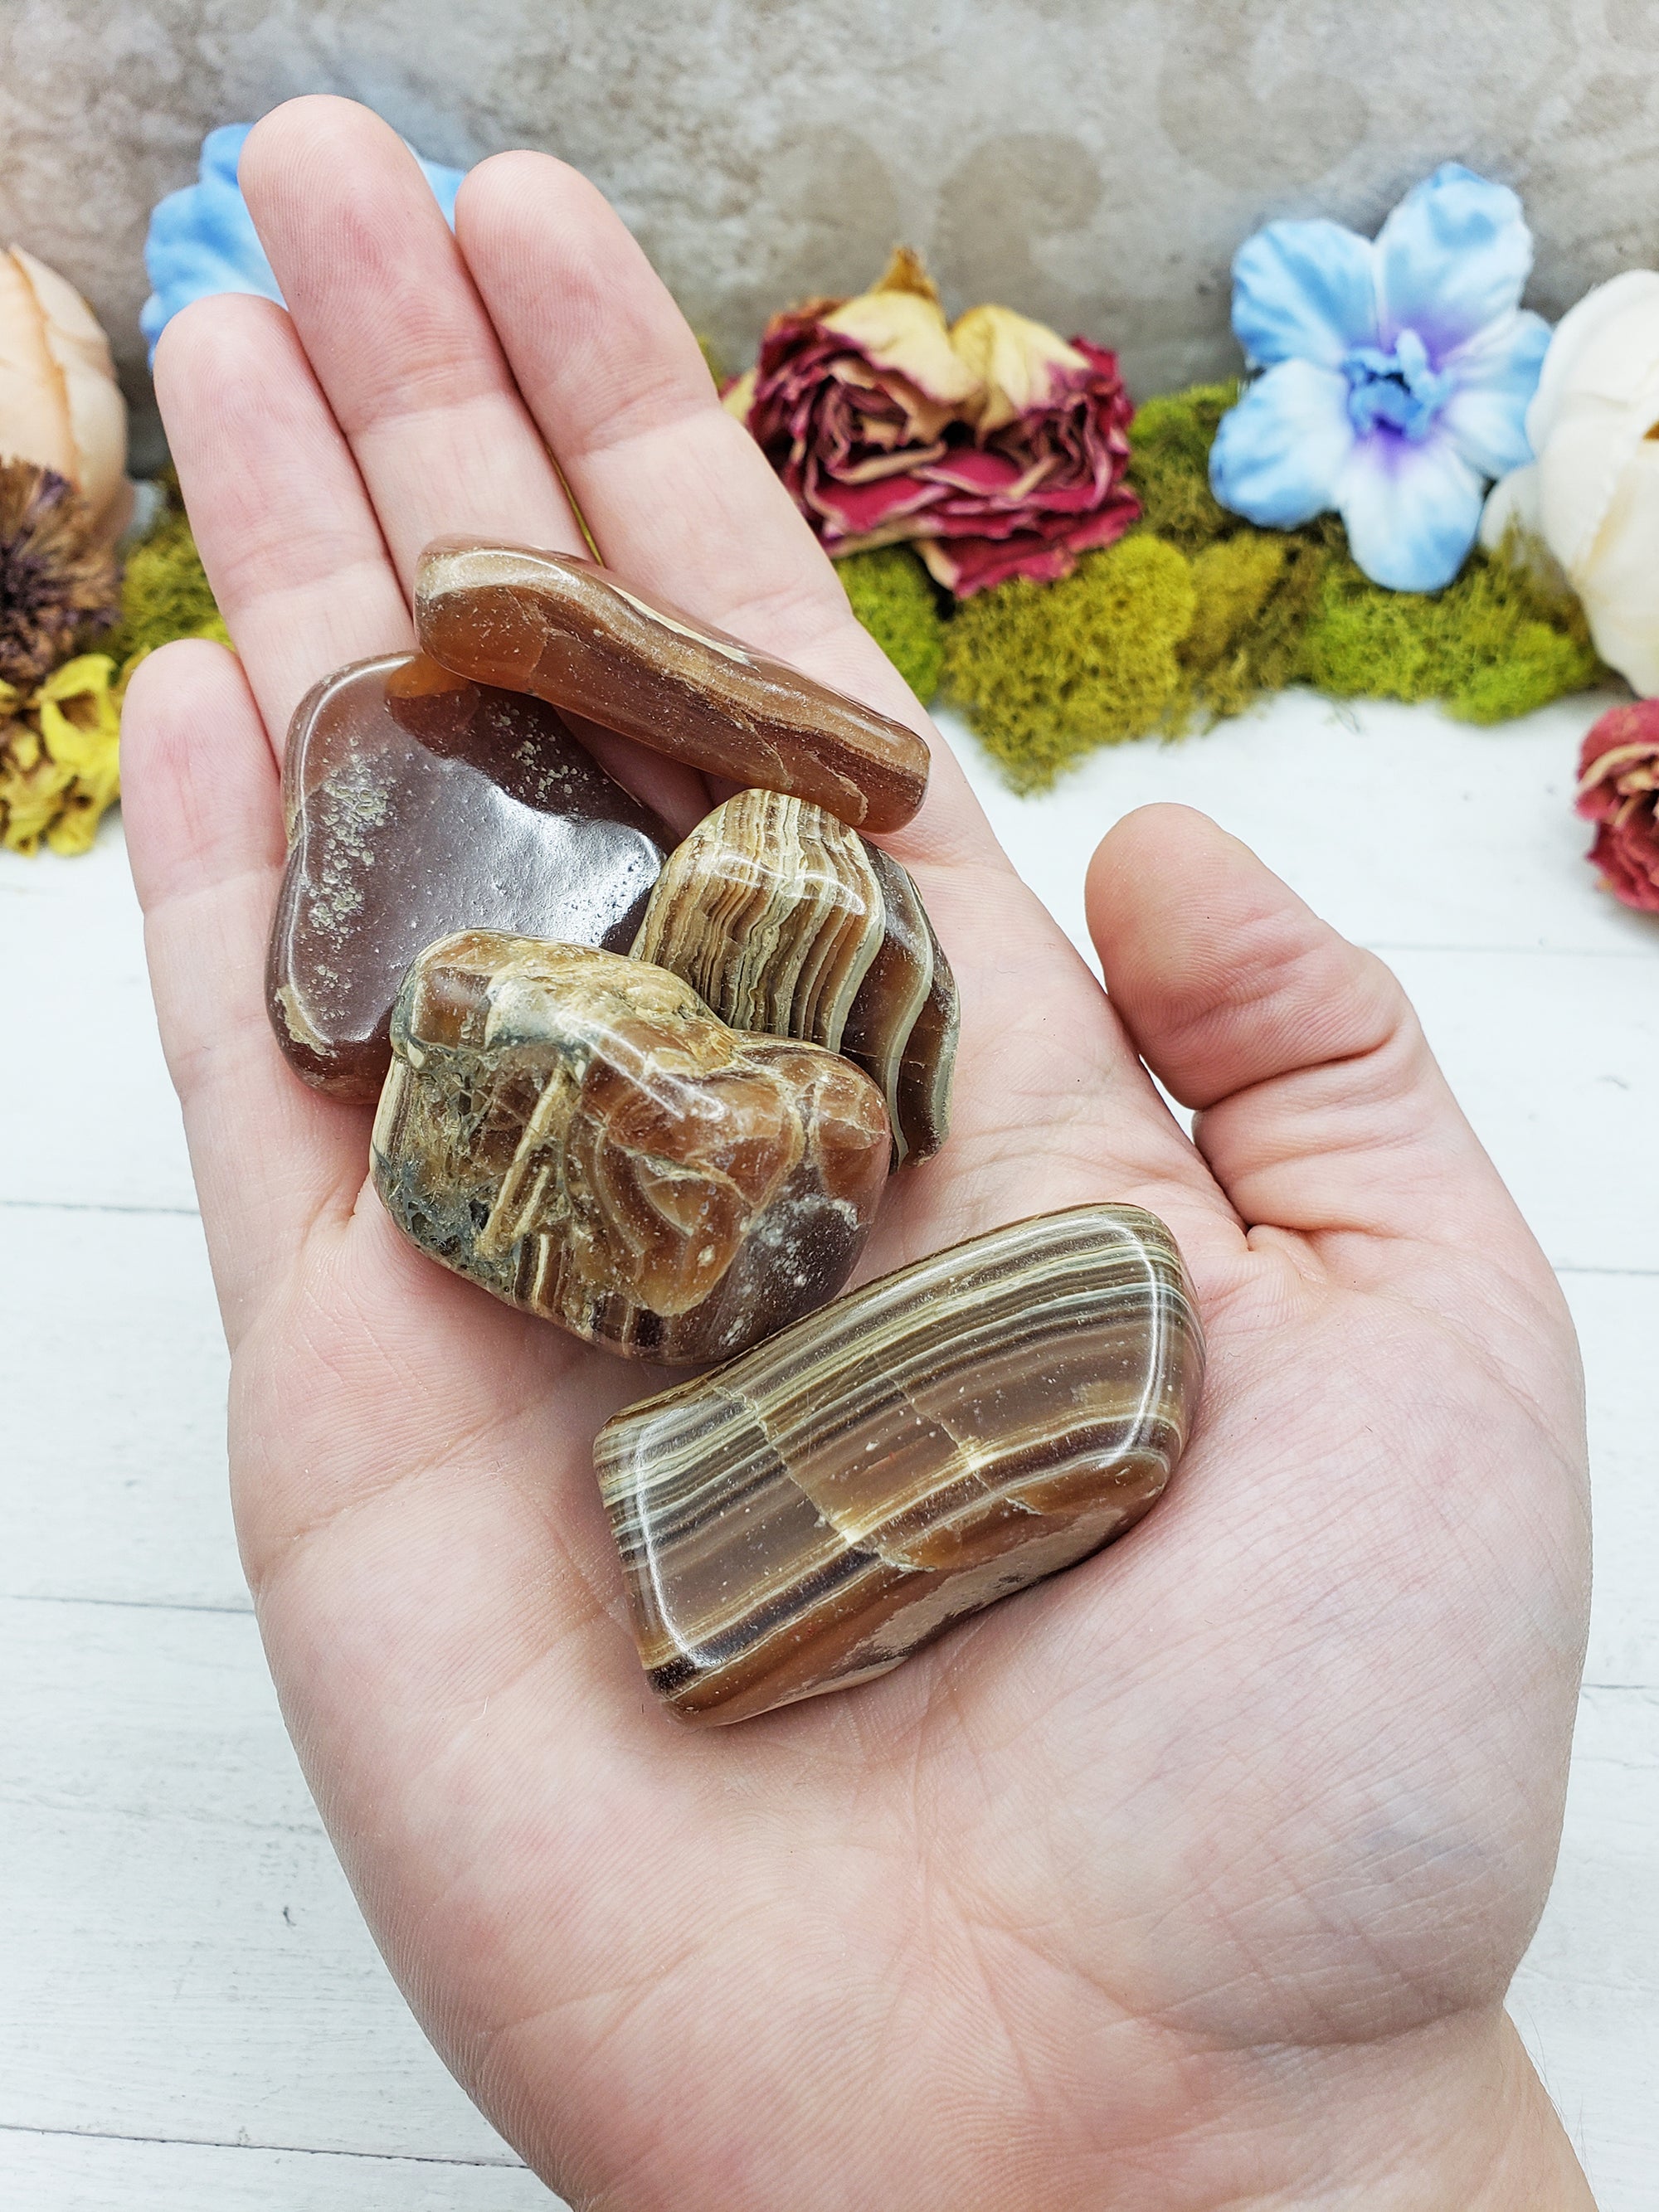 chocolate rhodocrosite stones in hand